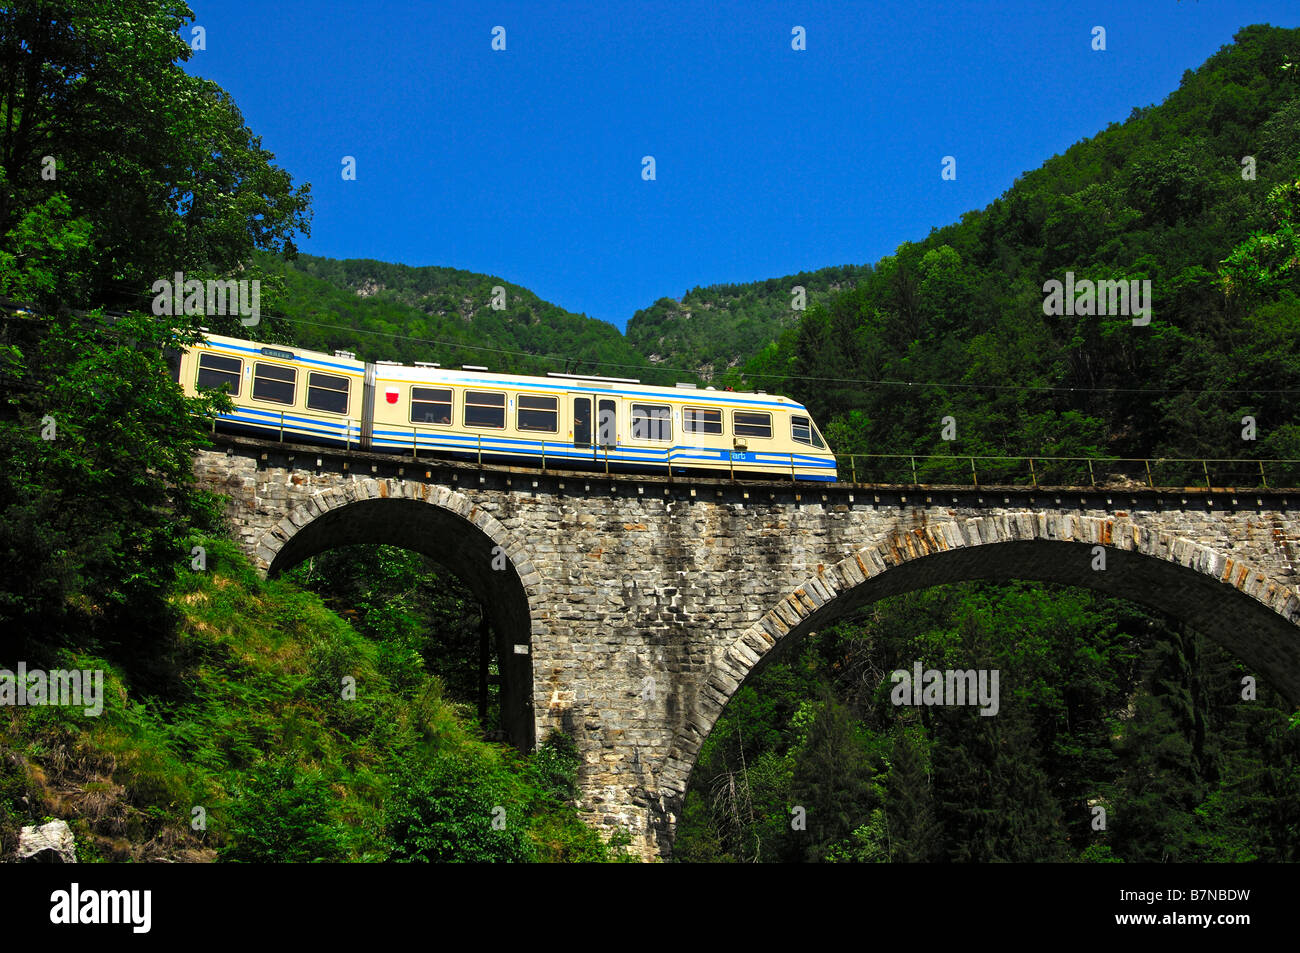 The Centovalli train crosses a viaduct in the Centovalli valley, Ticino, Switzerland Stock Photo